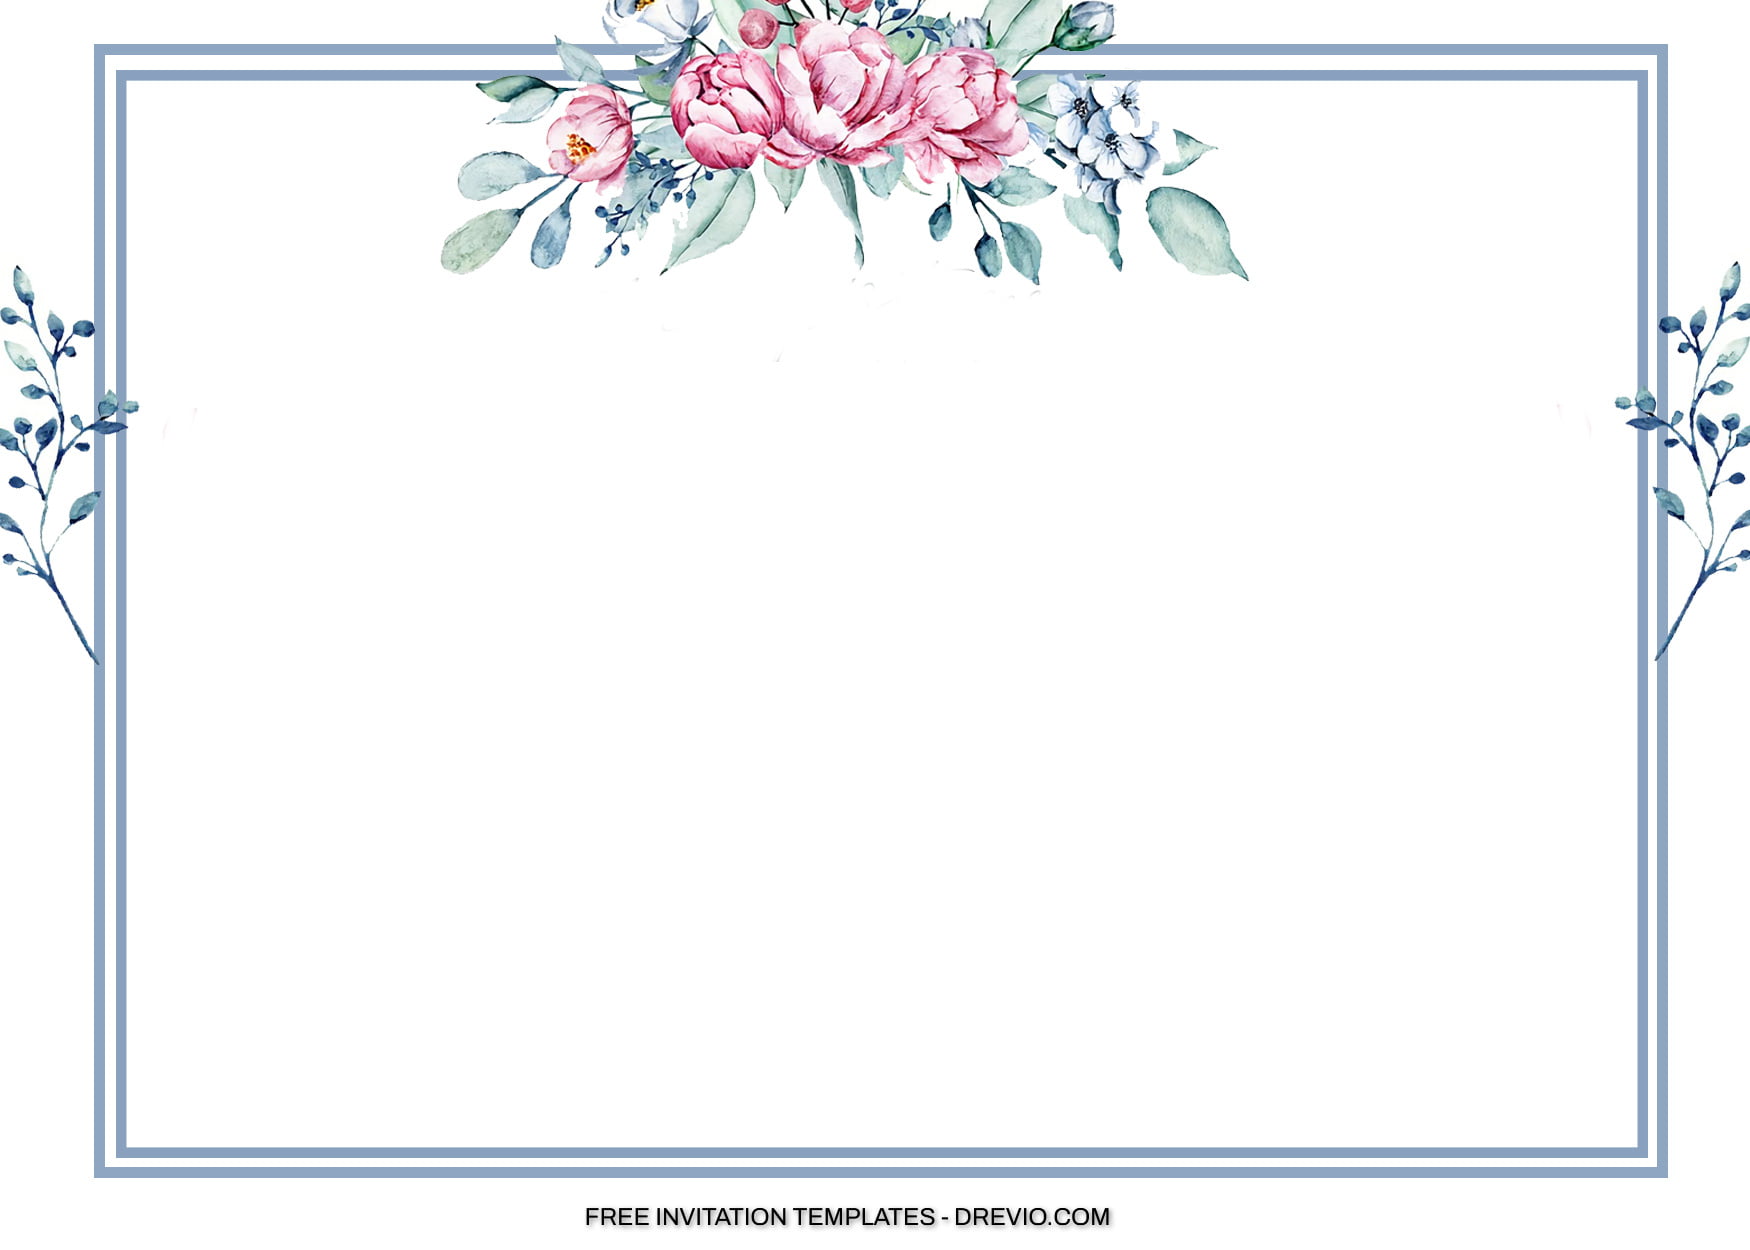 9+ Square Frame Pastel Floral Invitation Templates